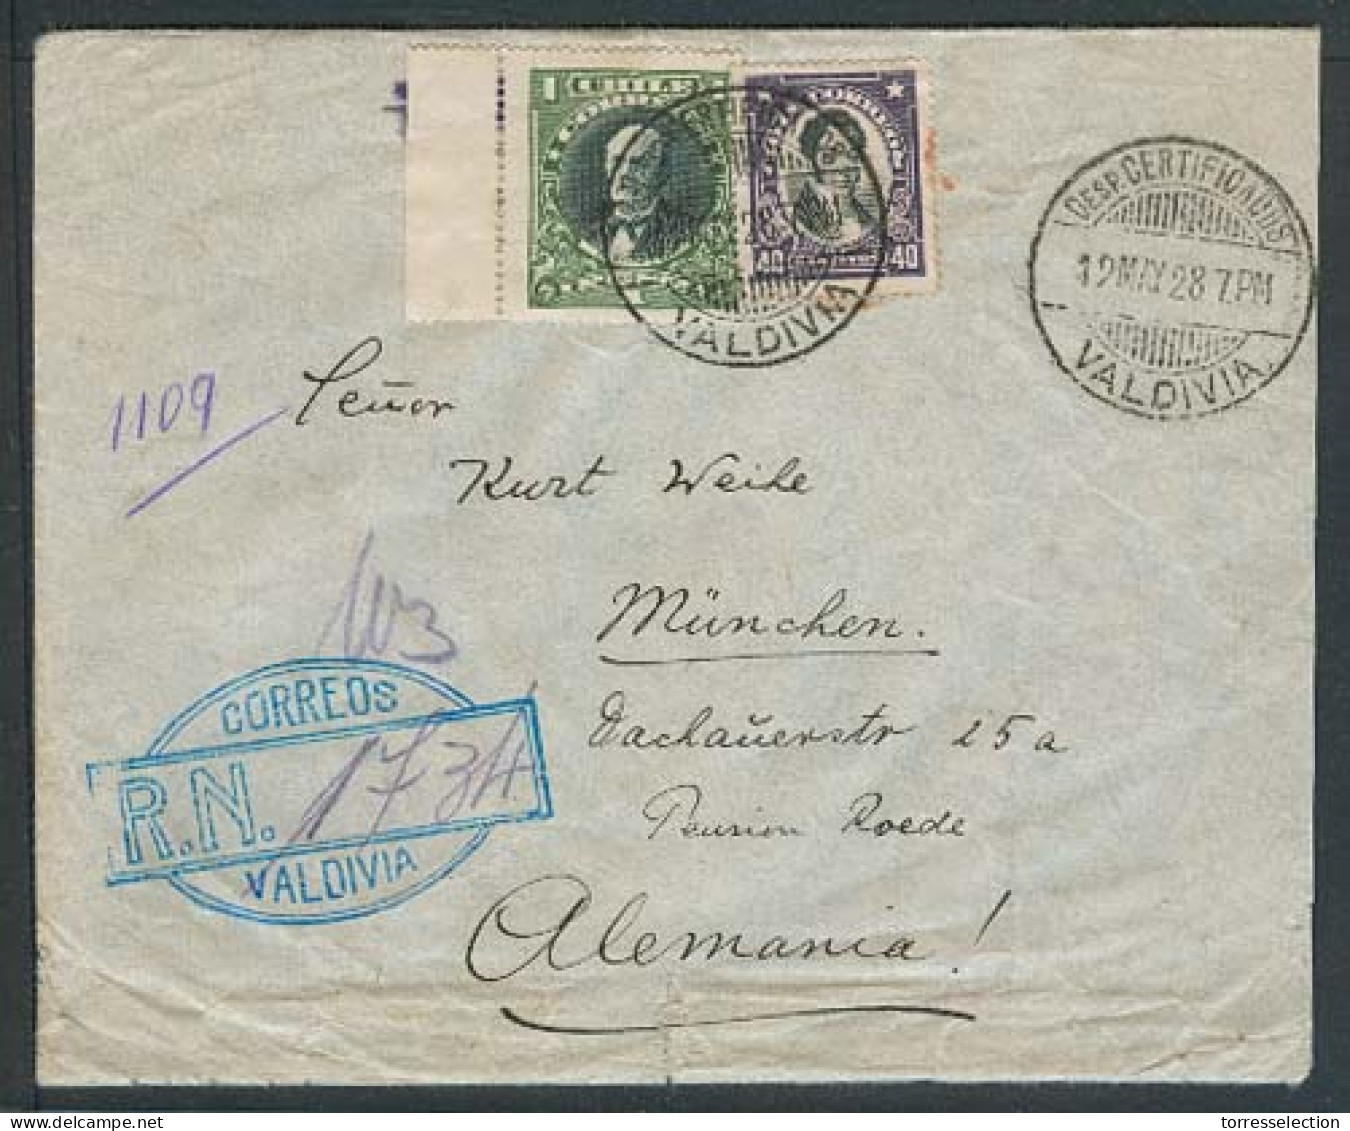 Chile - XX. 1928. Valdivia - Germany. Reg Fkd Env 1 Peso 40c Env + Special Blue Green Reg Cachet. VF Item. - Cile